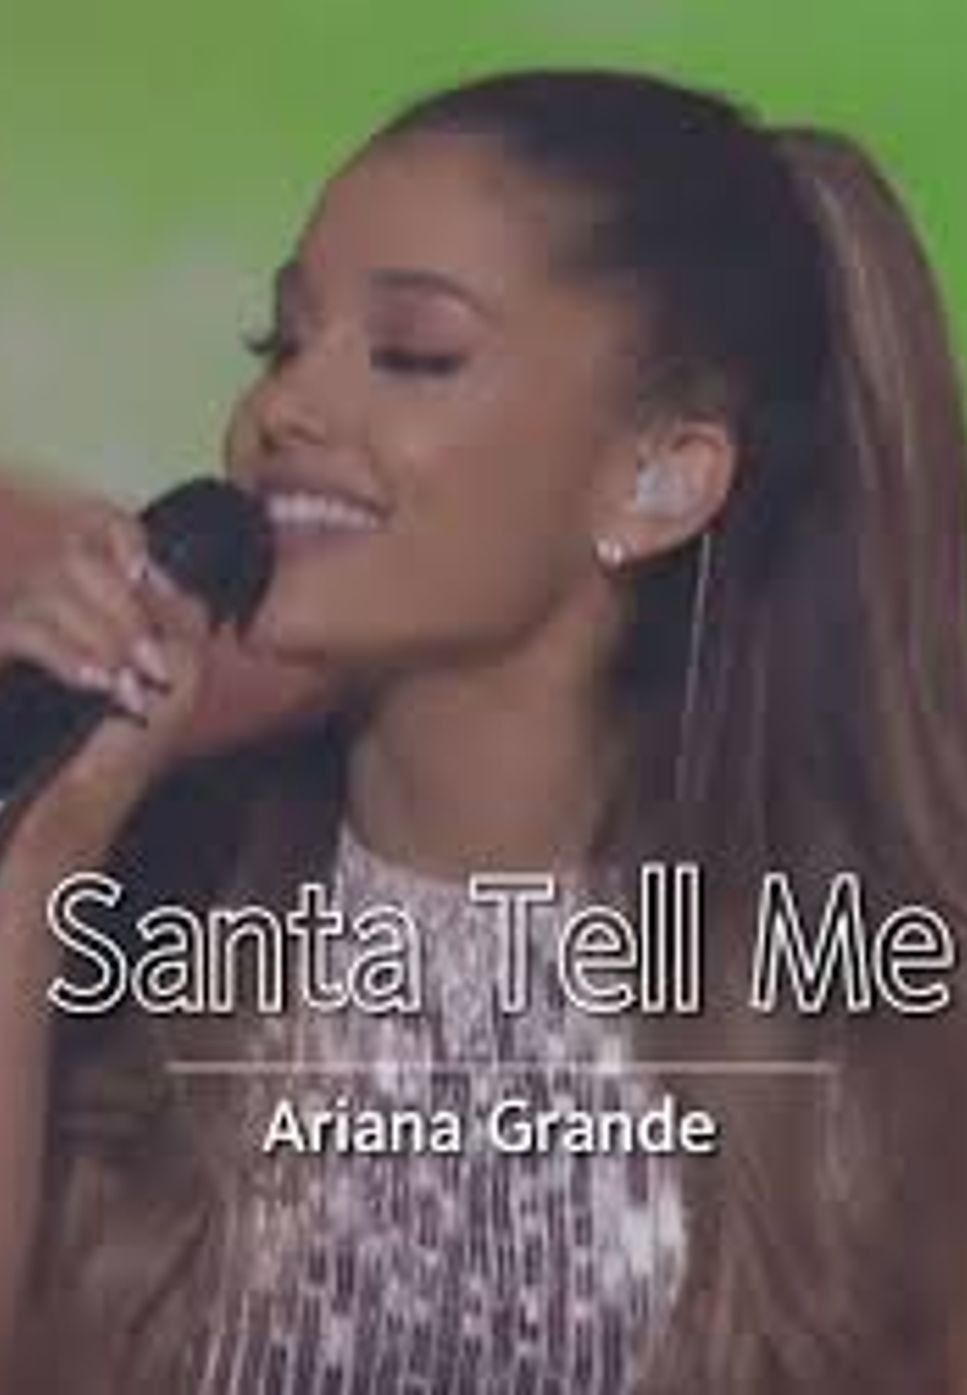 Ariana grande - santa tell me by 별백드럼